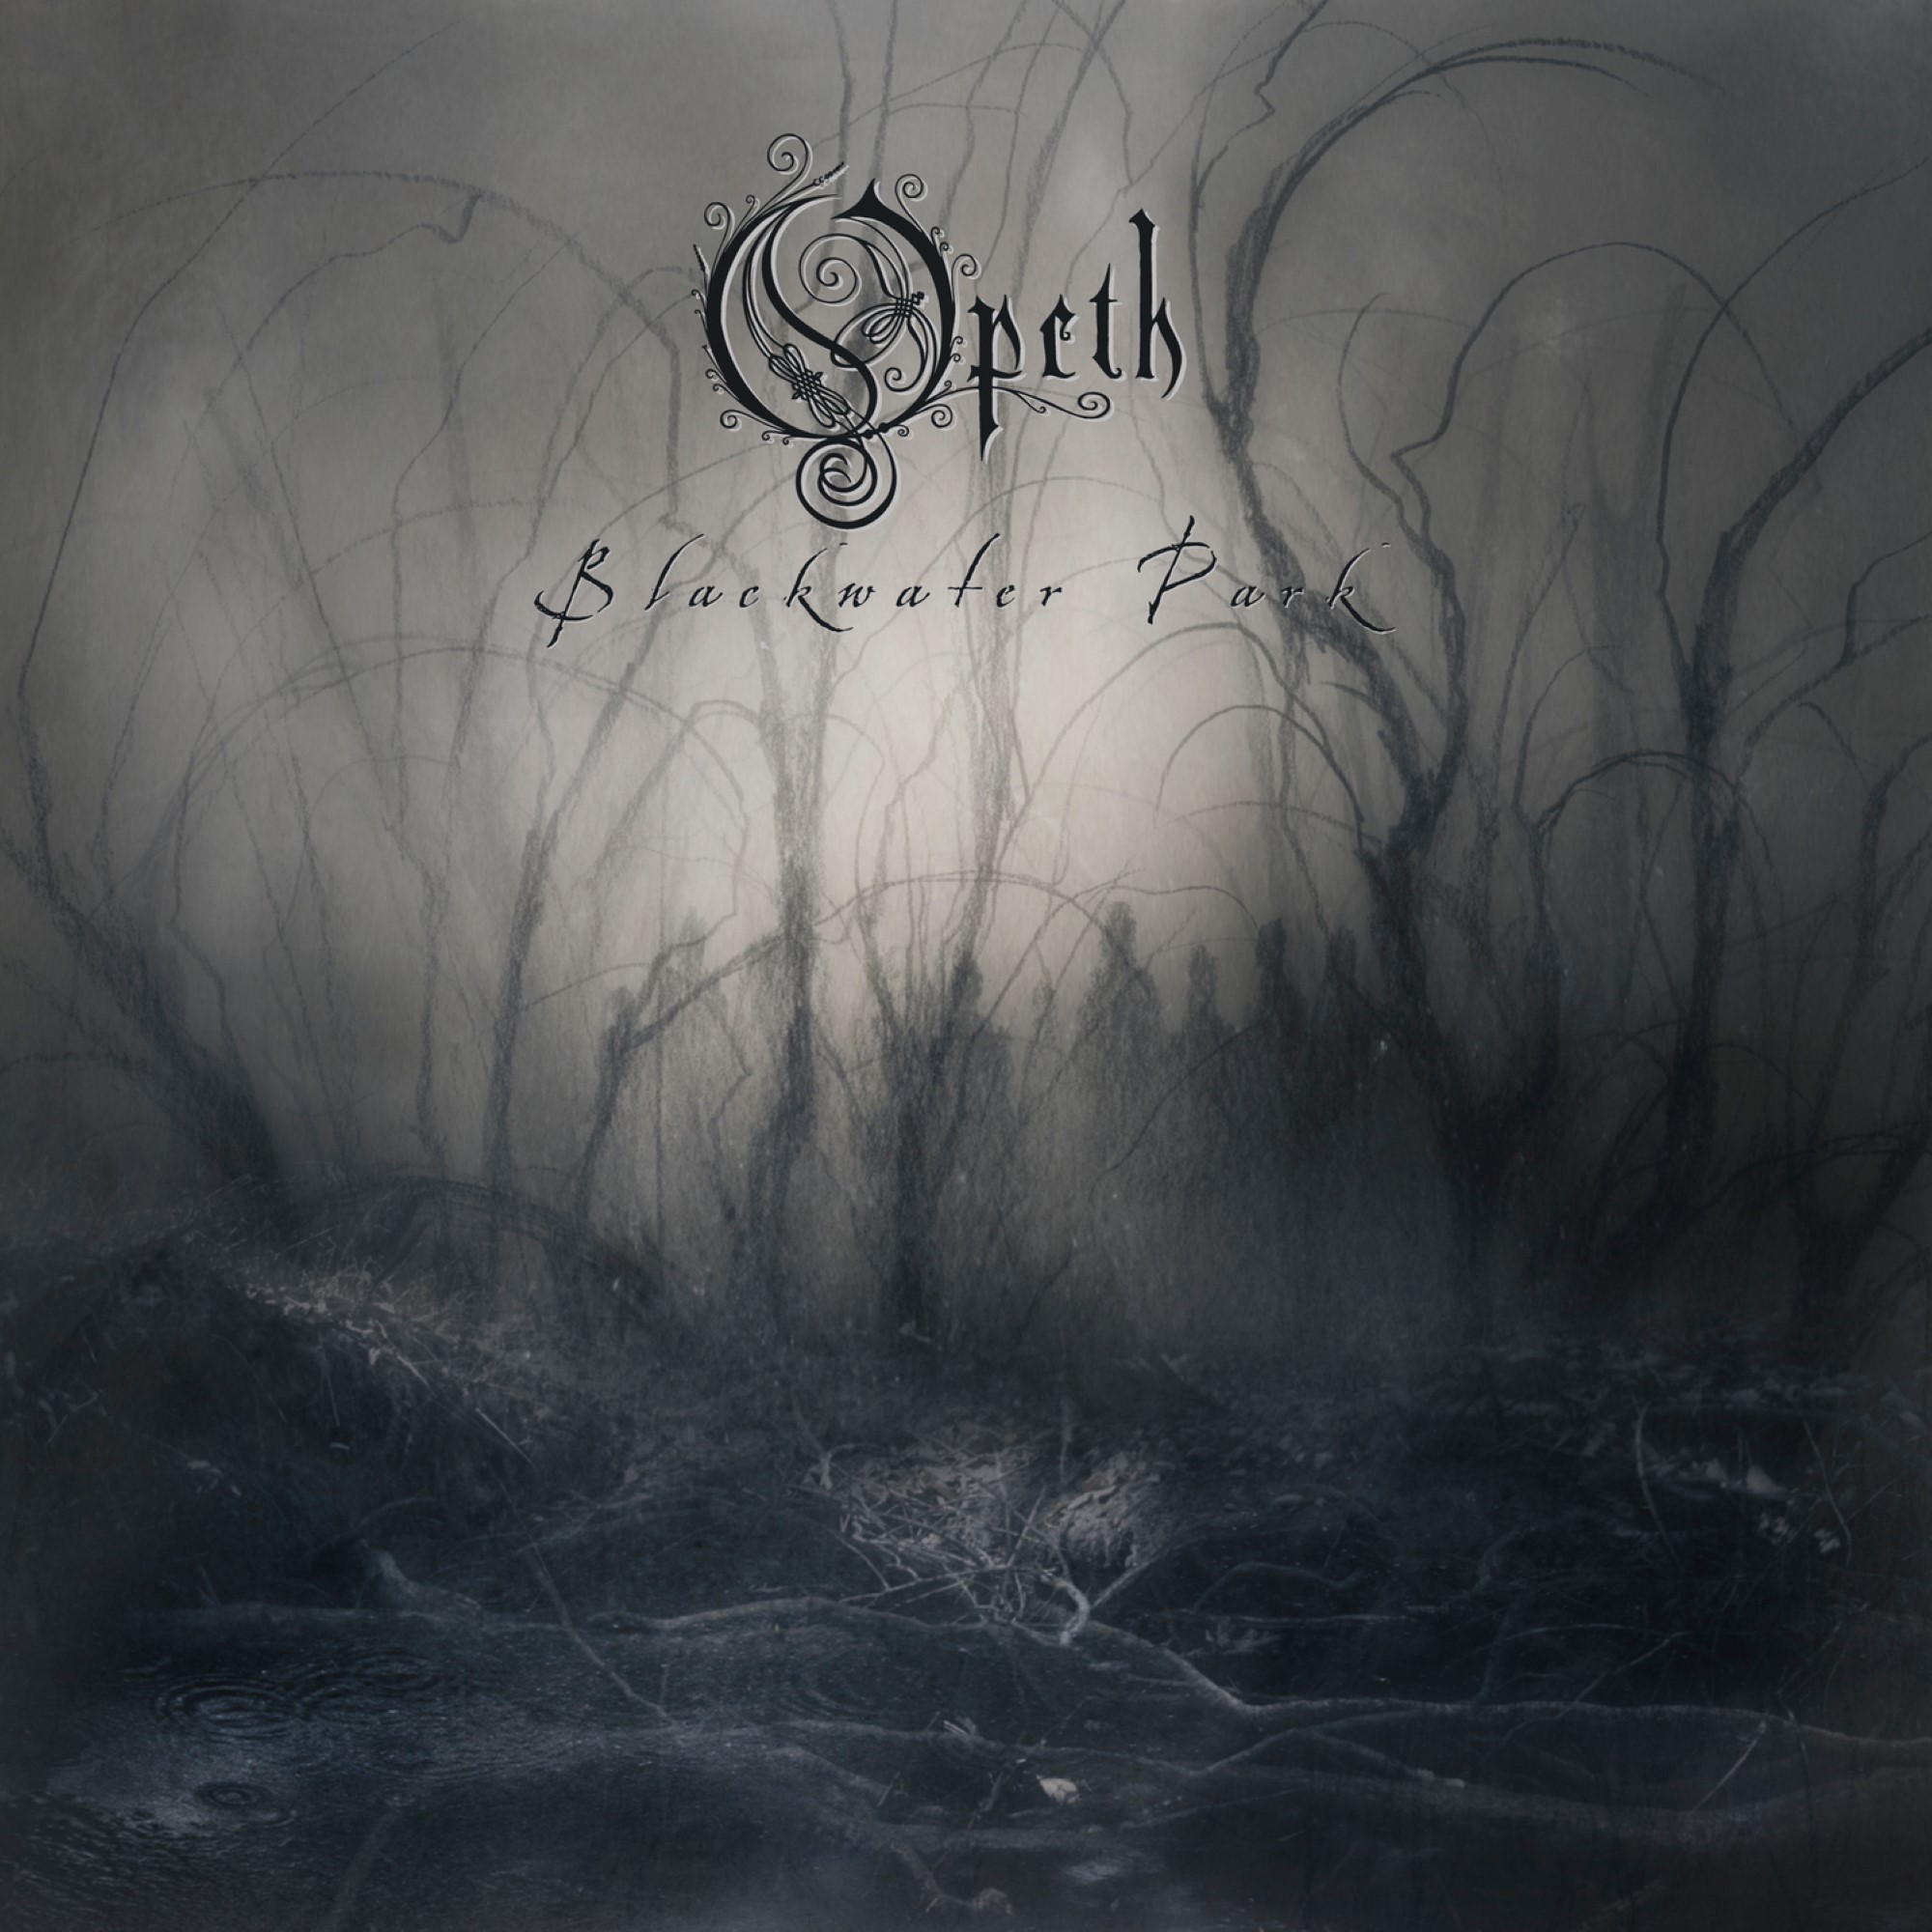 Blackwater Park|Opeth